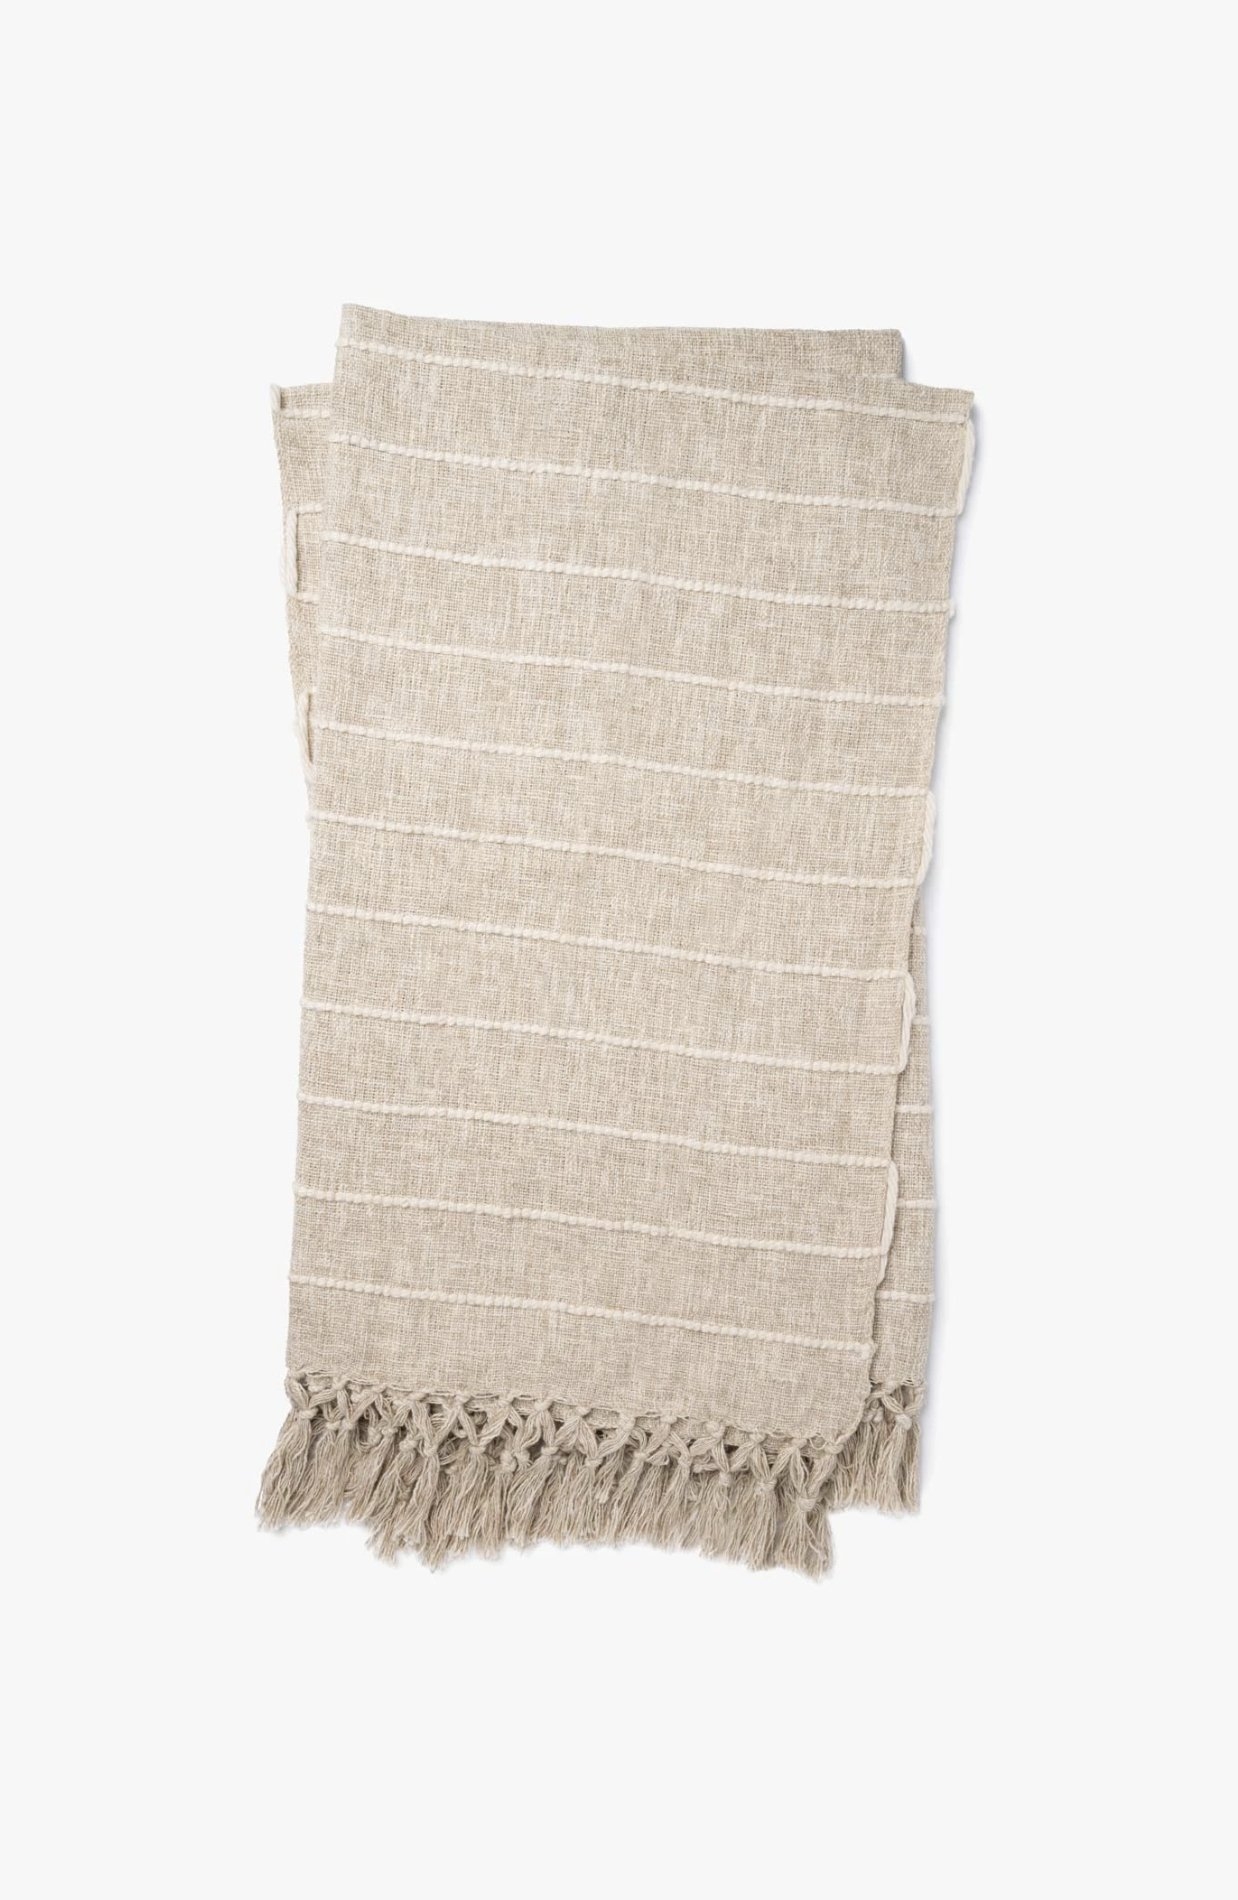 Striped Throw Blanket, Tan & Ivory - Image 0